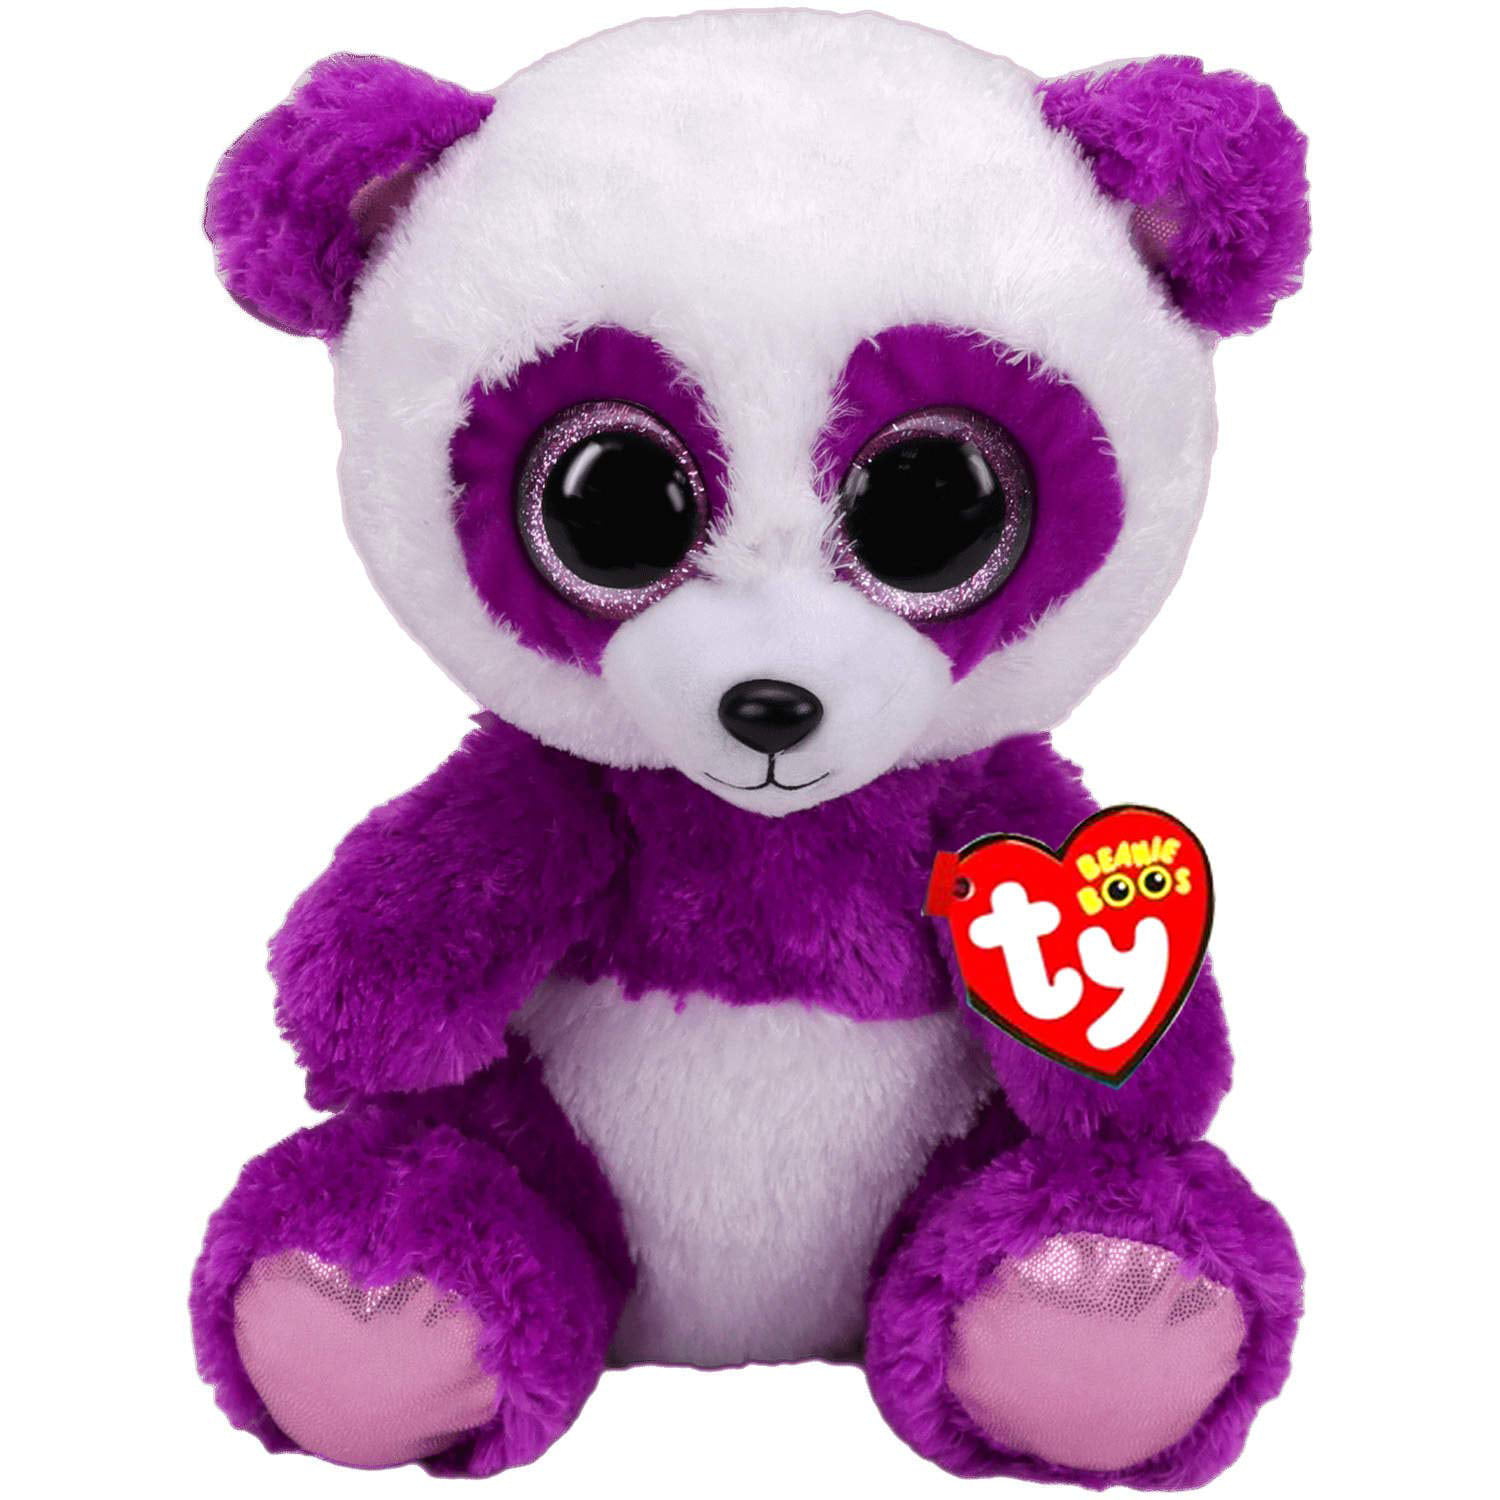 Ty Beanie Boos 6" BOOM BOOM the Panda Stuffed Animal Plush MWMT's w/ Heart Tags 